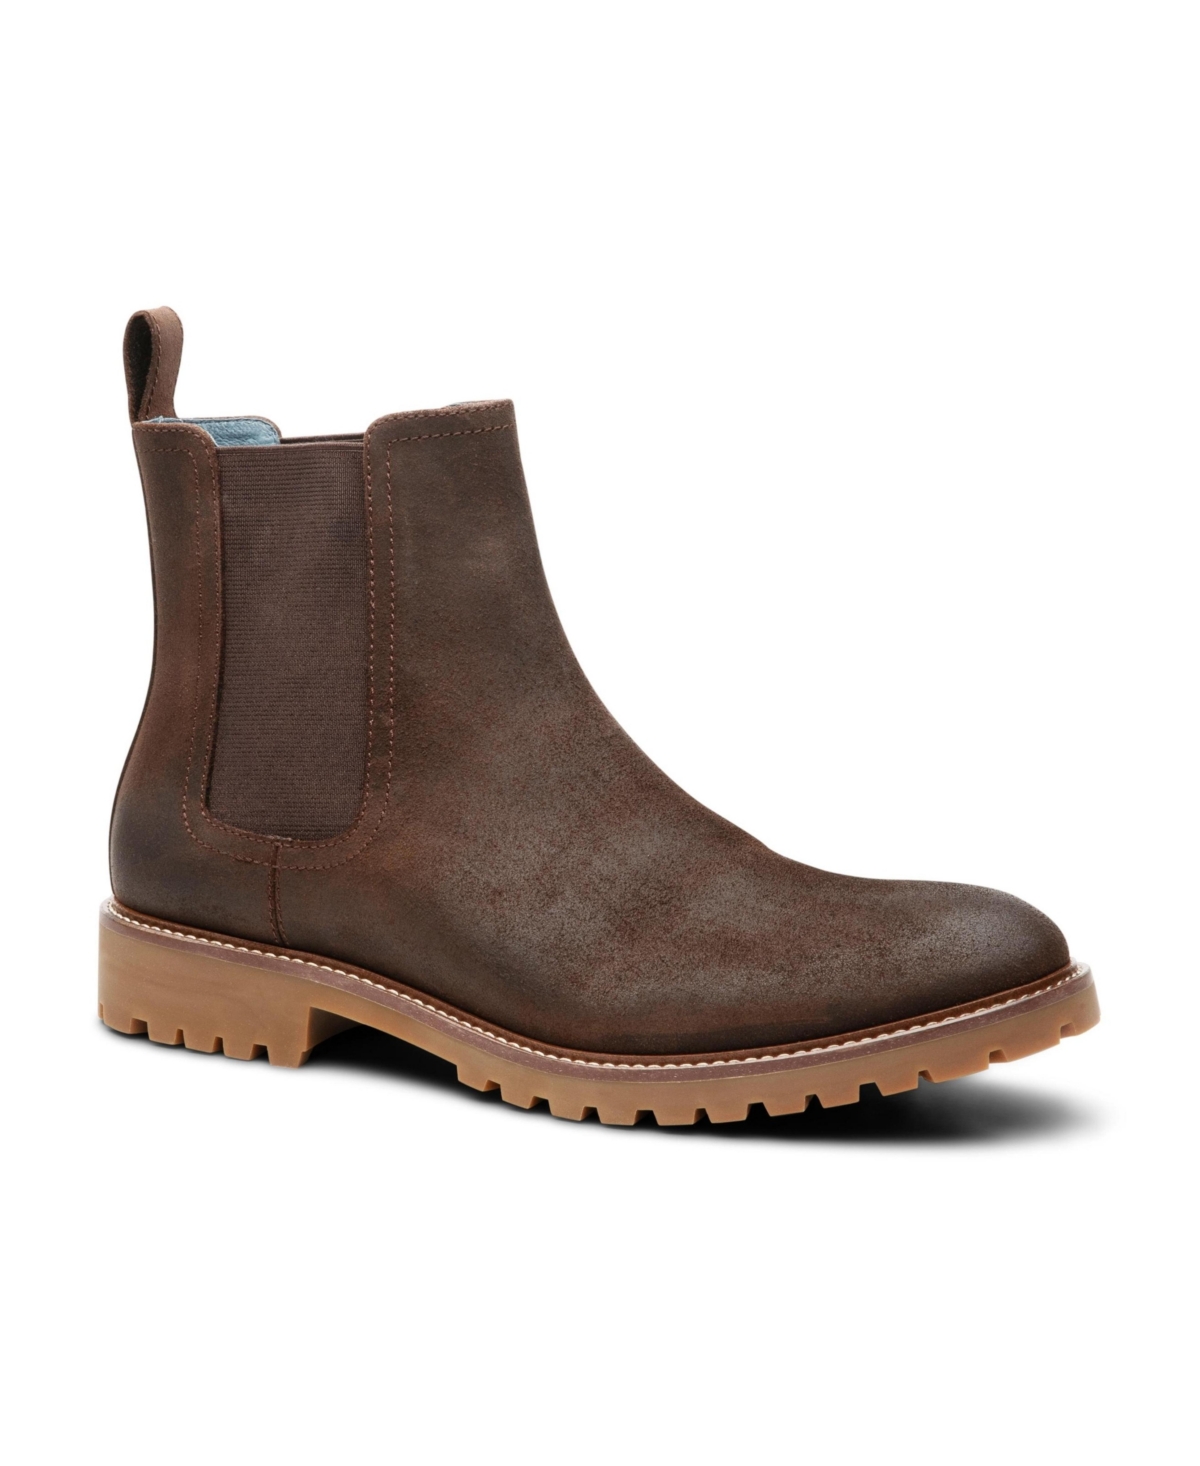 Men's Melbourne Fashion Casual Chelsea Boots - Brown